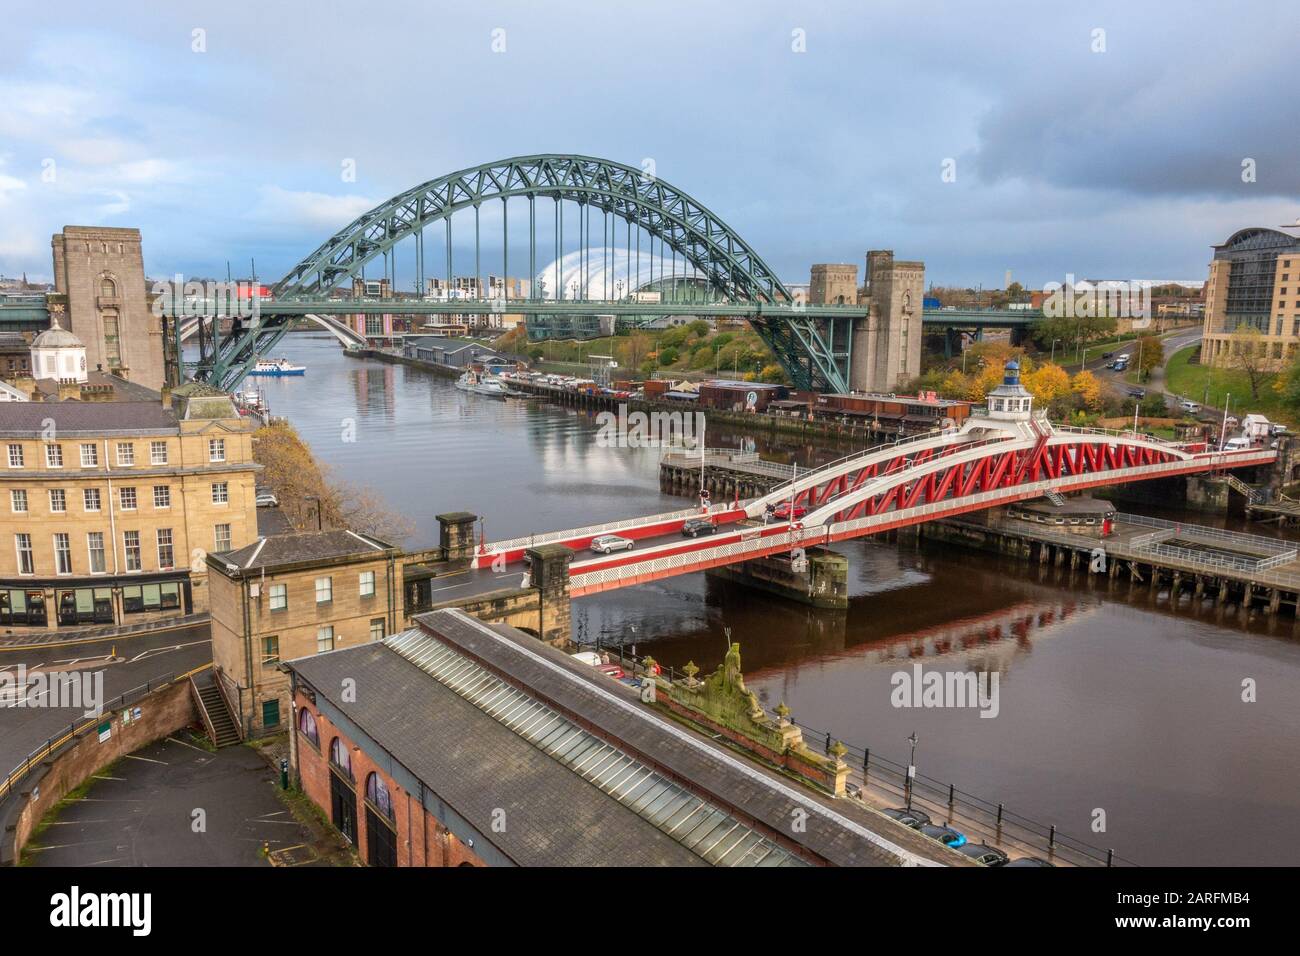 The Tyne and Swing bridges over the River Tyne, connecting Newcastle upon Tyne and Gateshead, UK. Stock Photo